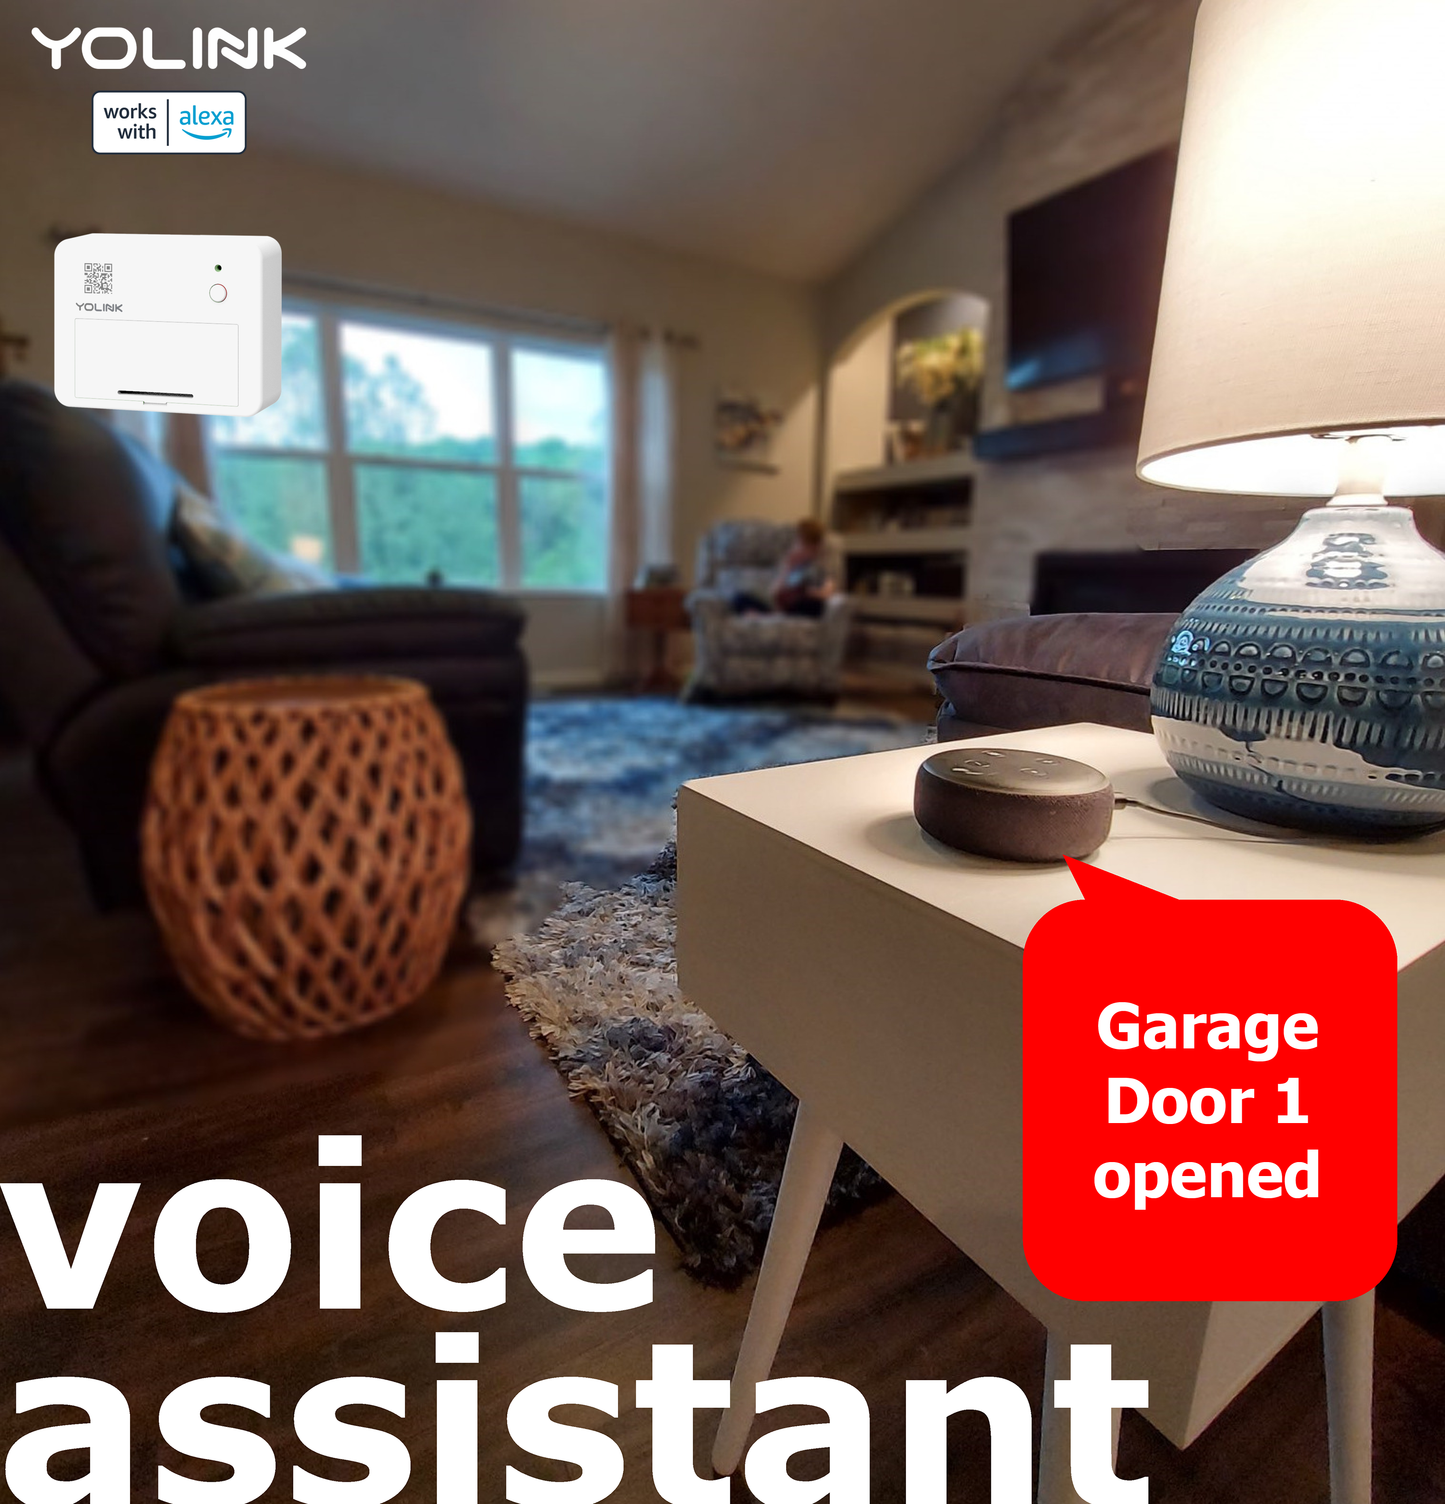 YoLink Garage Door Kit 1 Works with Alexa, Google Assistant, and IFTTT, YoLink Hub Required - YoLink